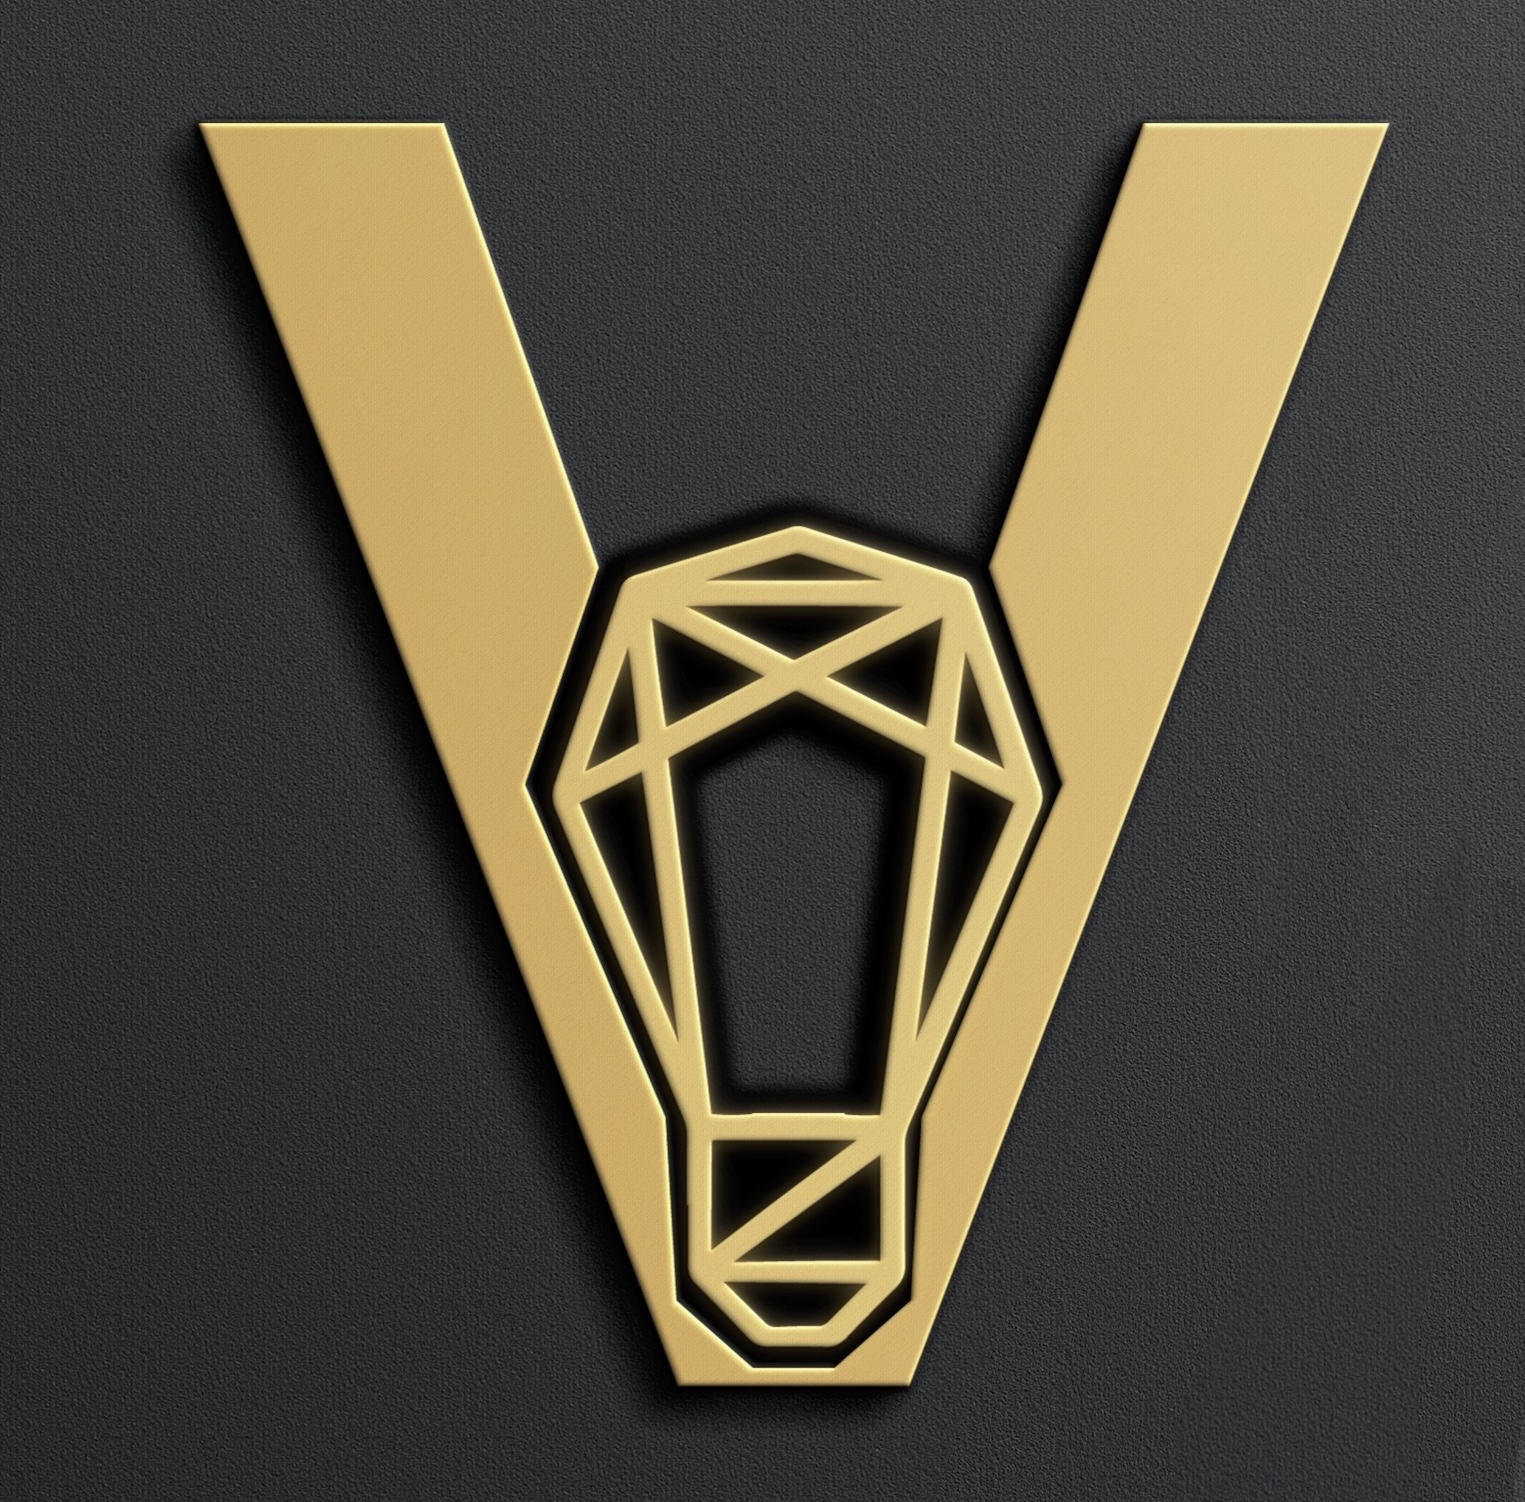 Vivid Electric Inc.'s logo